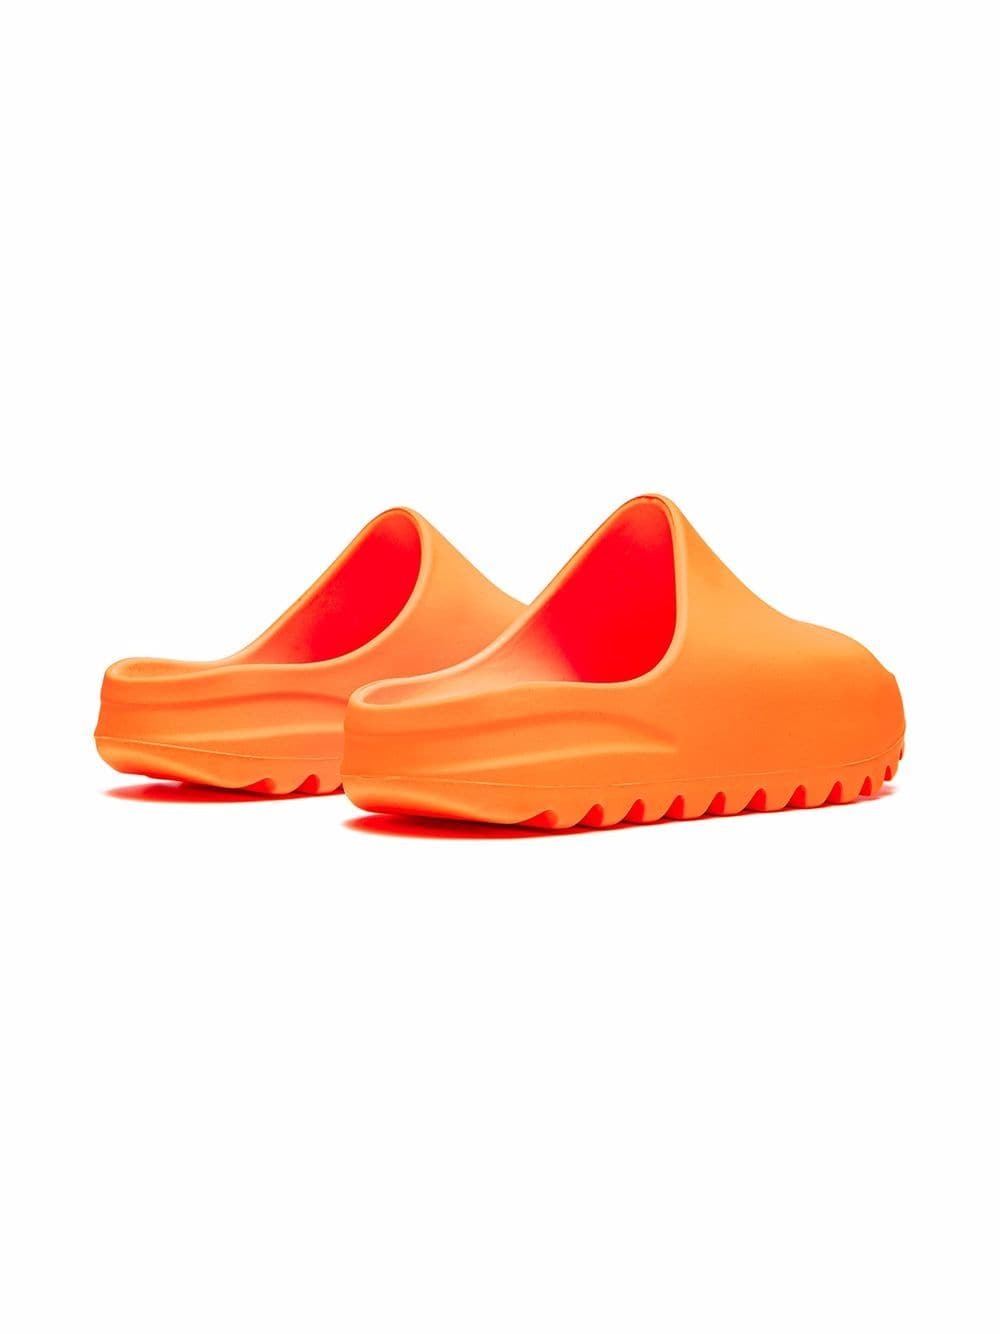 Pre-owned Yeezy Slide Enflame Orange Adidas Back To School